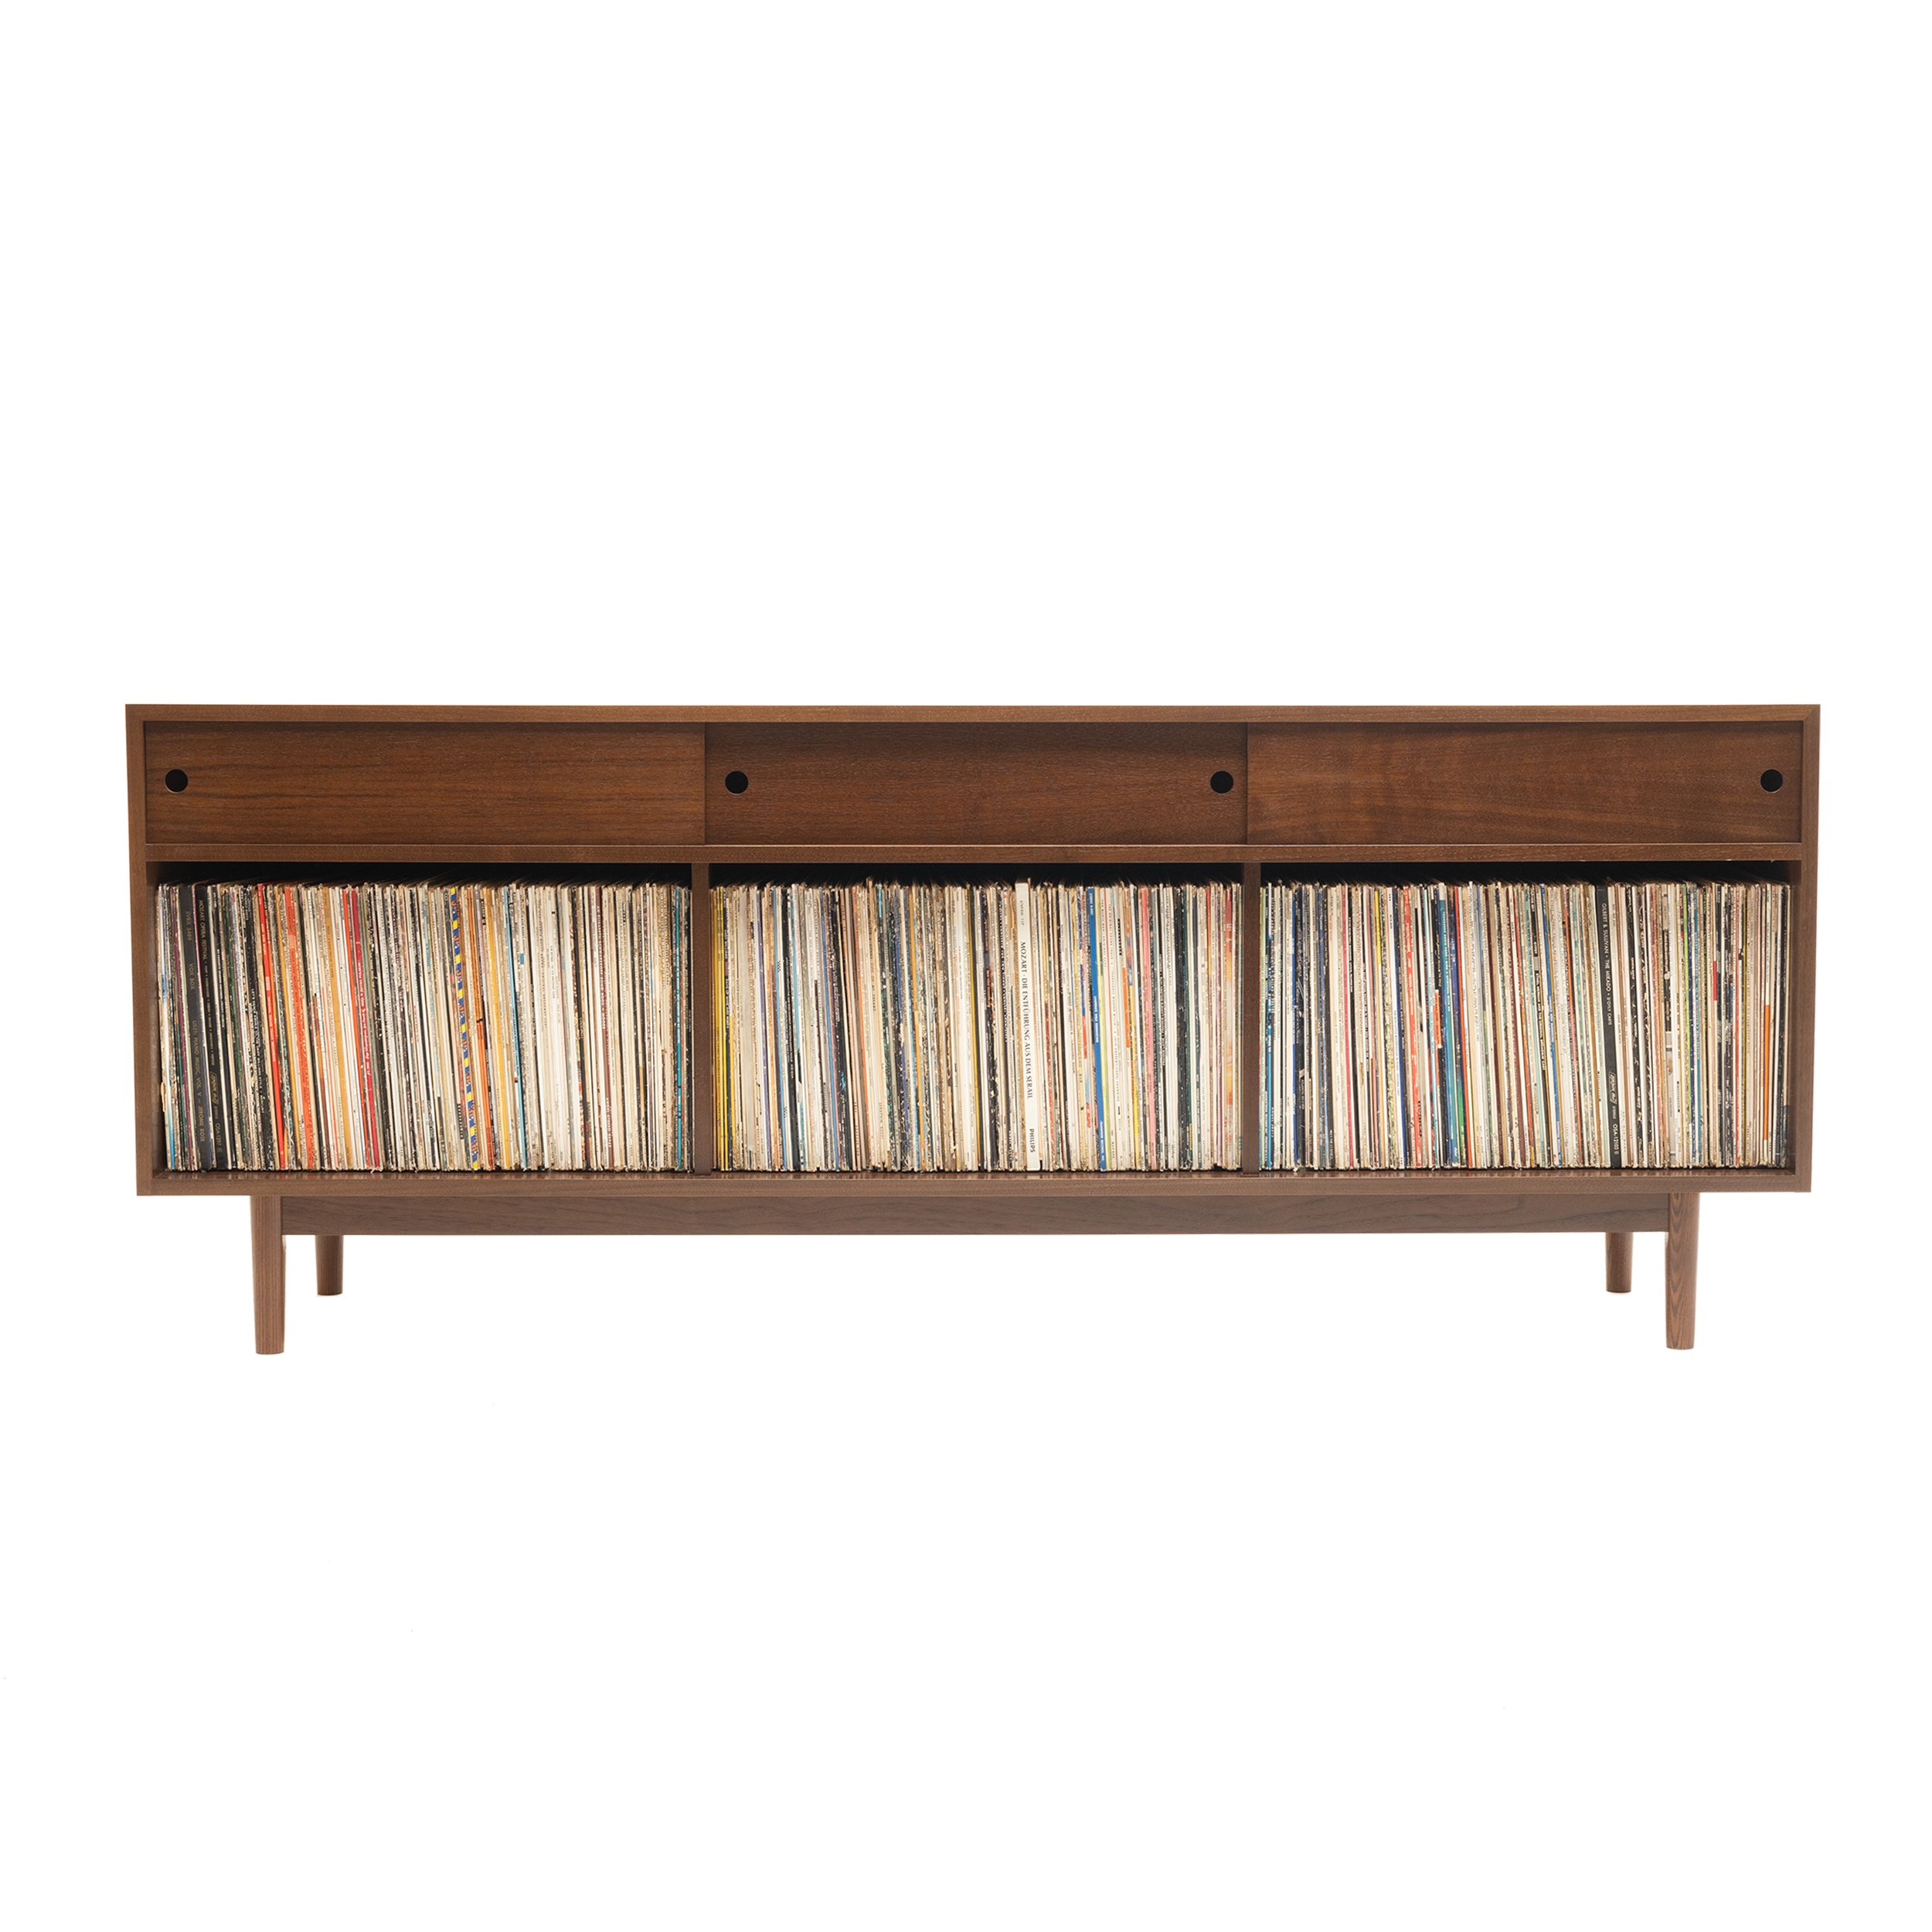 1 x 3 Component Record Storage Cabinet